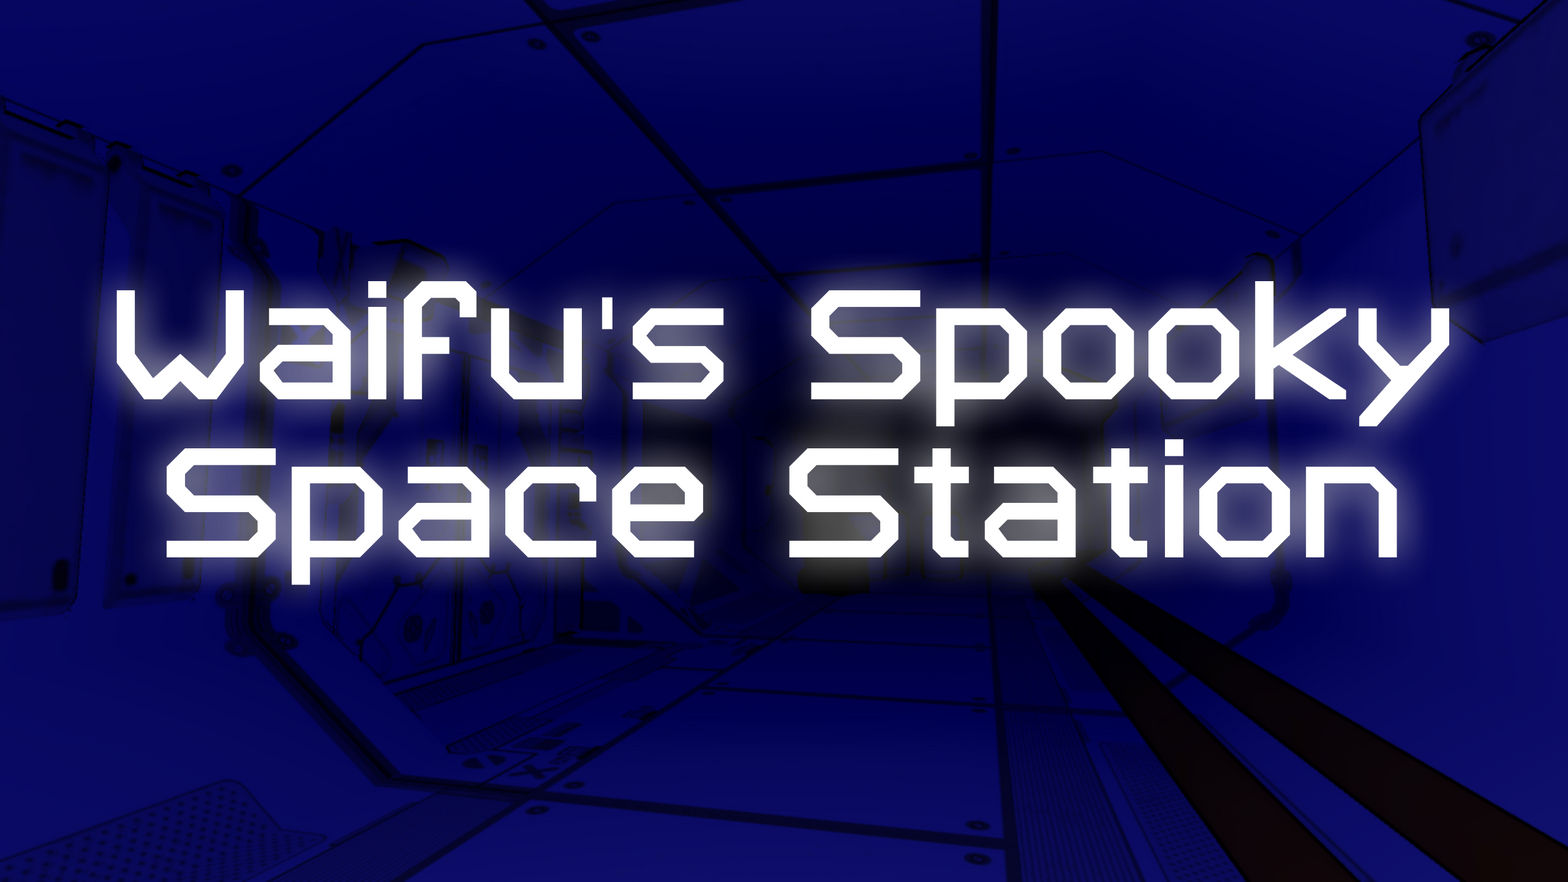 Waifu's Spooky Space Station VR